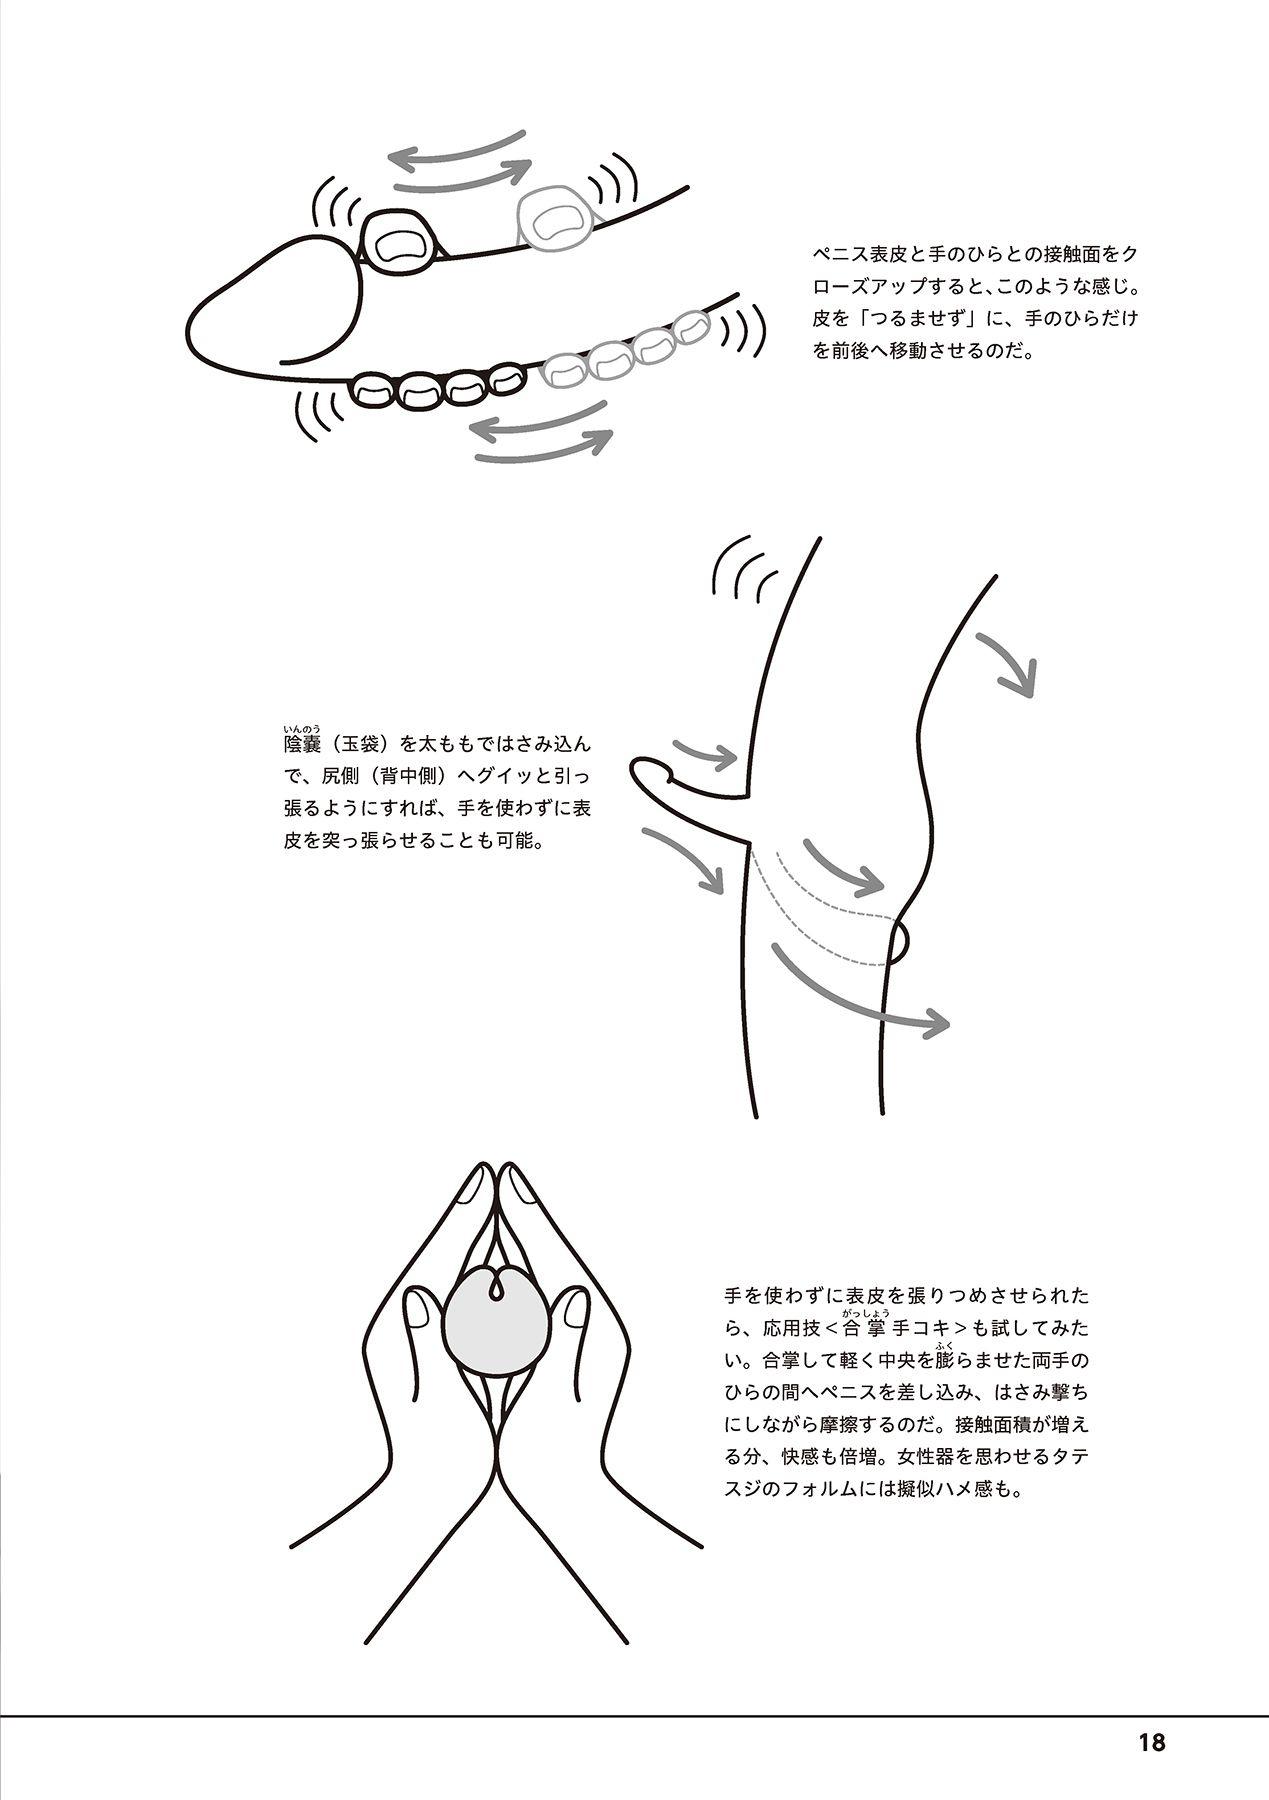 Otoko no Jii Onanie Kanzen Manual Illustration Han...... Onanie Play 19